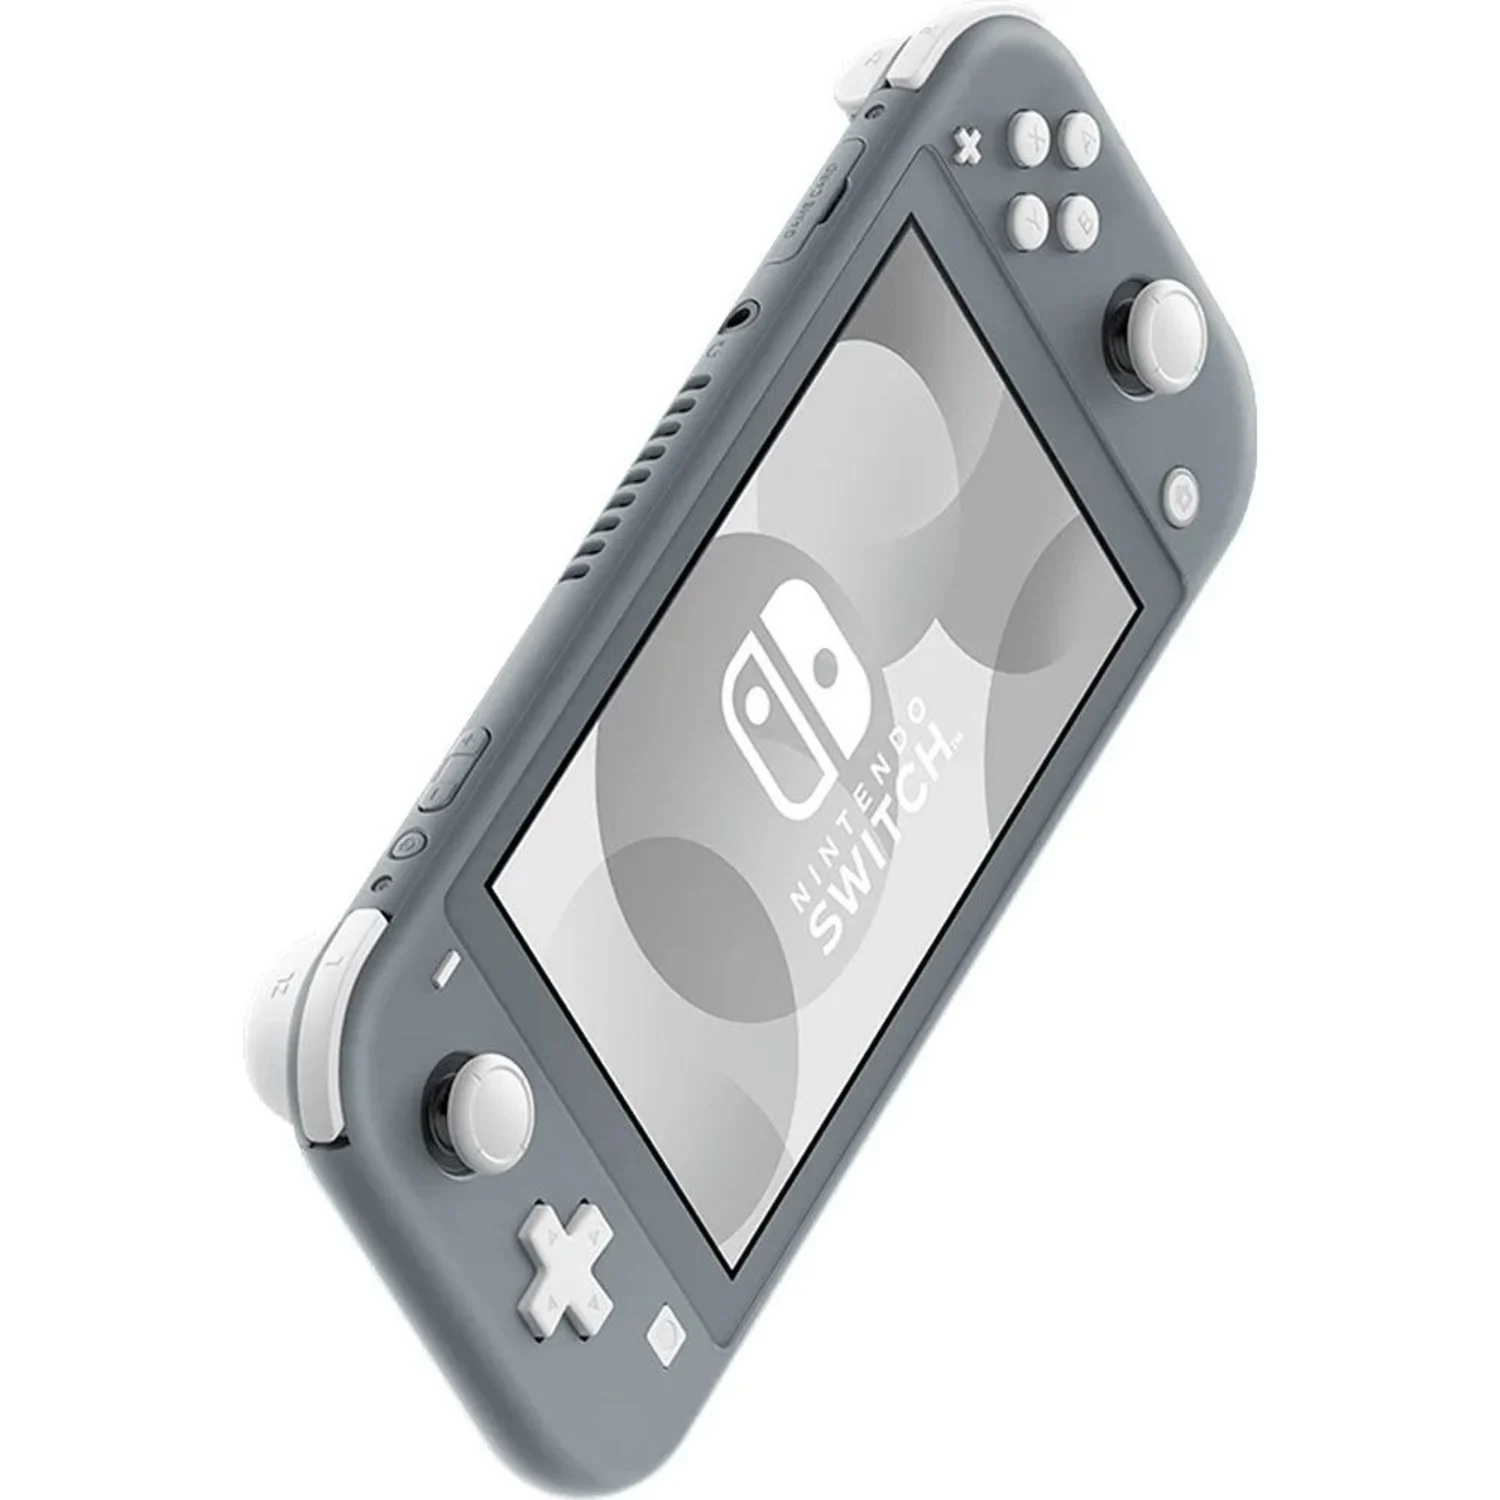 Console Nintendo Switch Lite/ Carregador Original - Cinza (HDH-S-GAZAA)